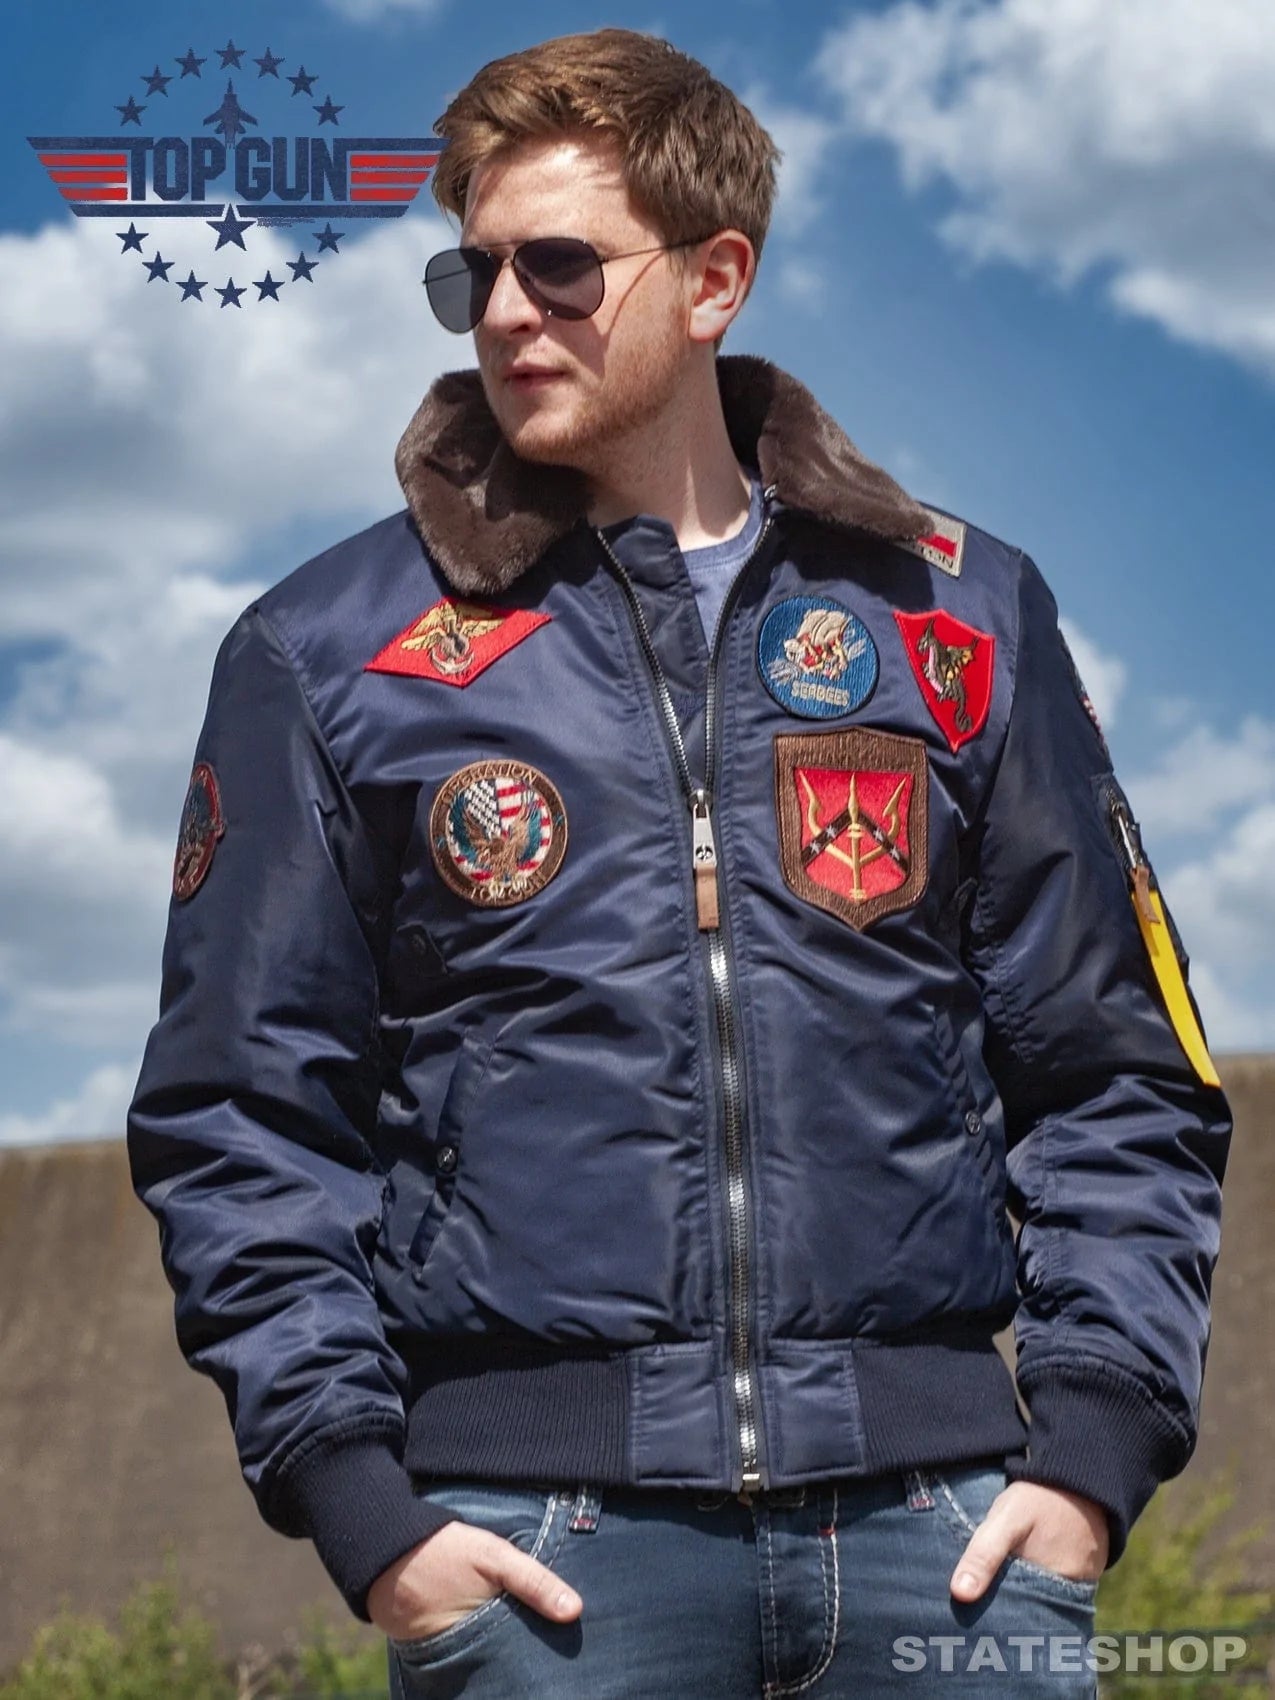 binnen buis betekenis Top Gun Bomber Jacket "Machine" Dark Blue - Stateshop Fashion